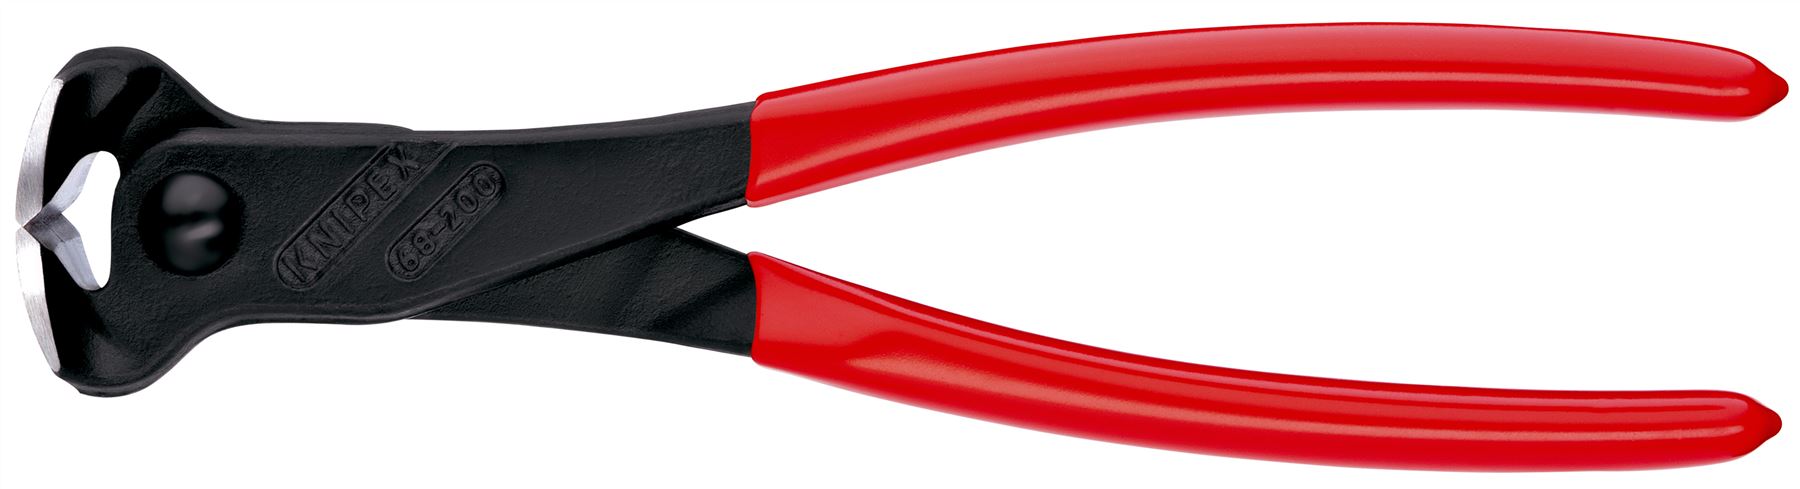 KNIPEX End Cutting Pliers Nipper 200mm Plastic Coated 68 01 200 SB